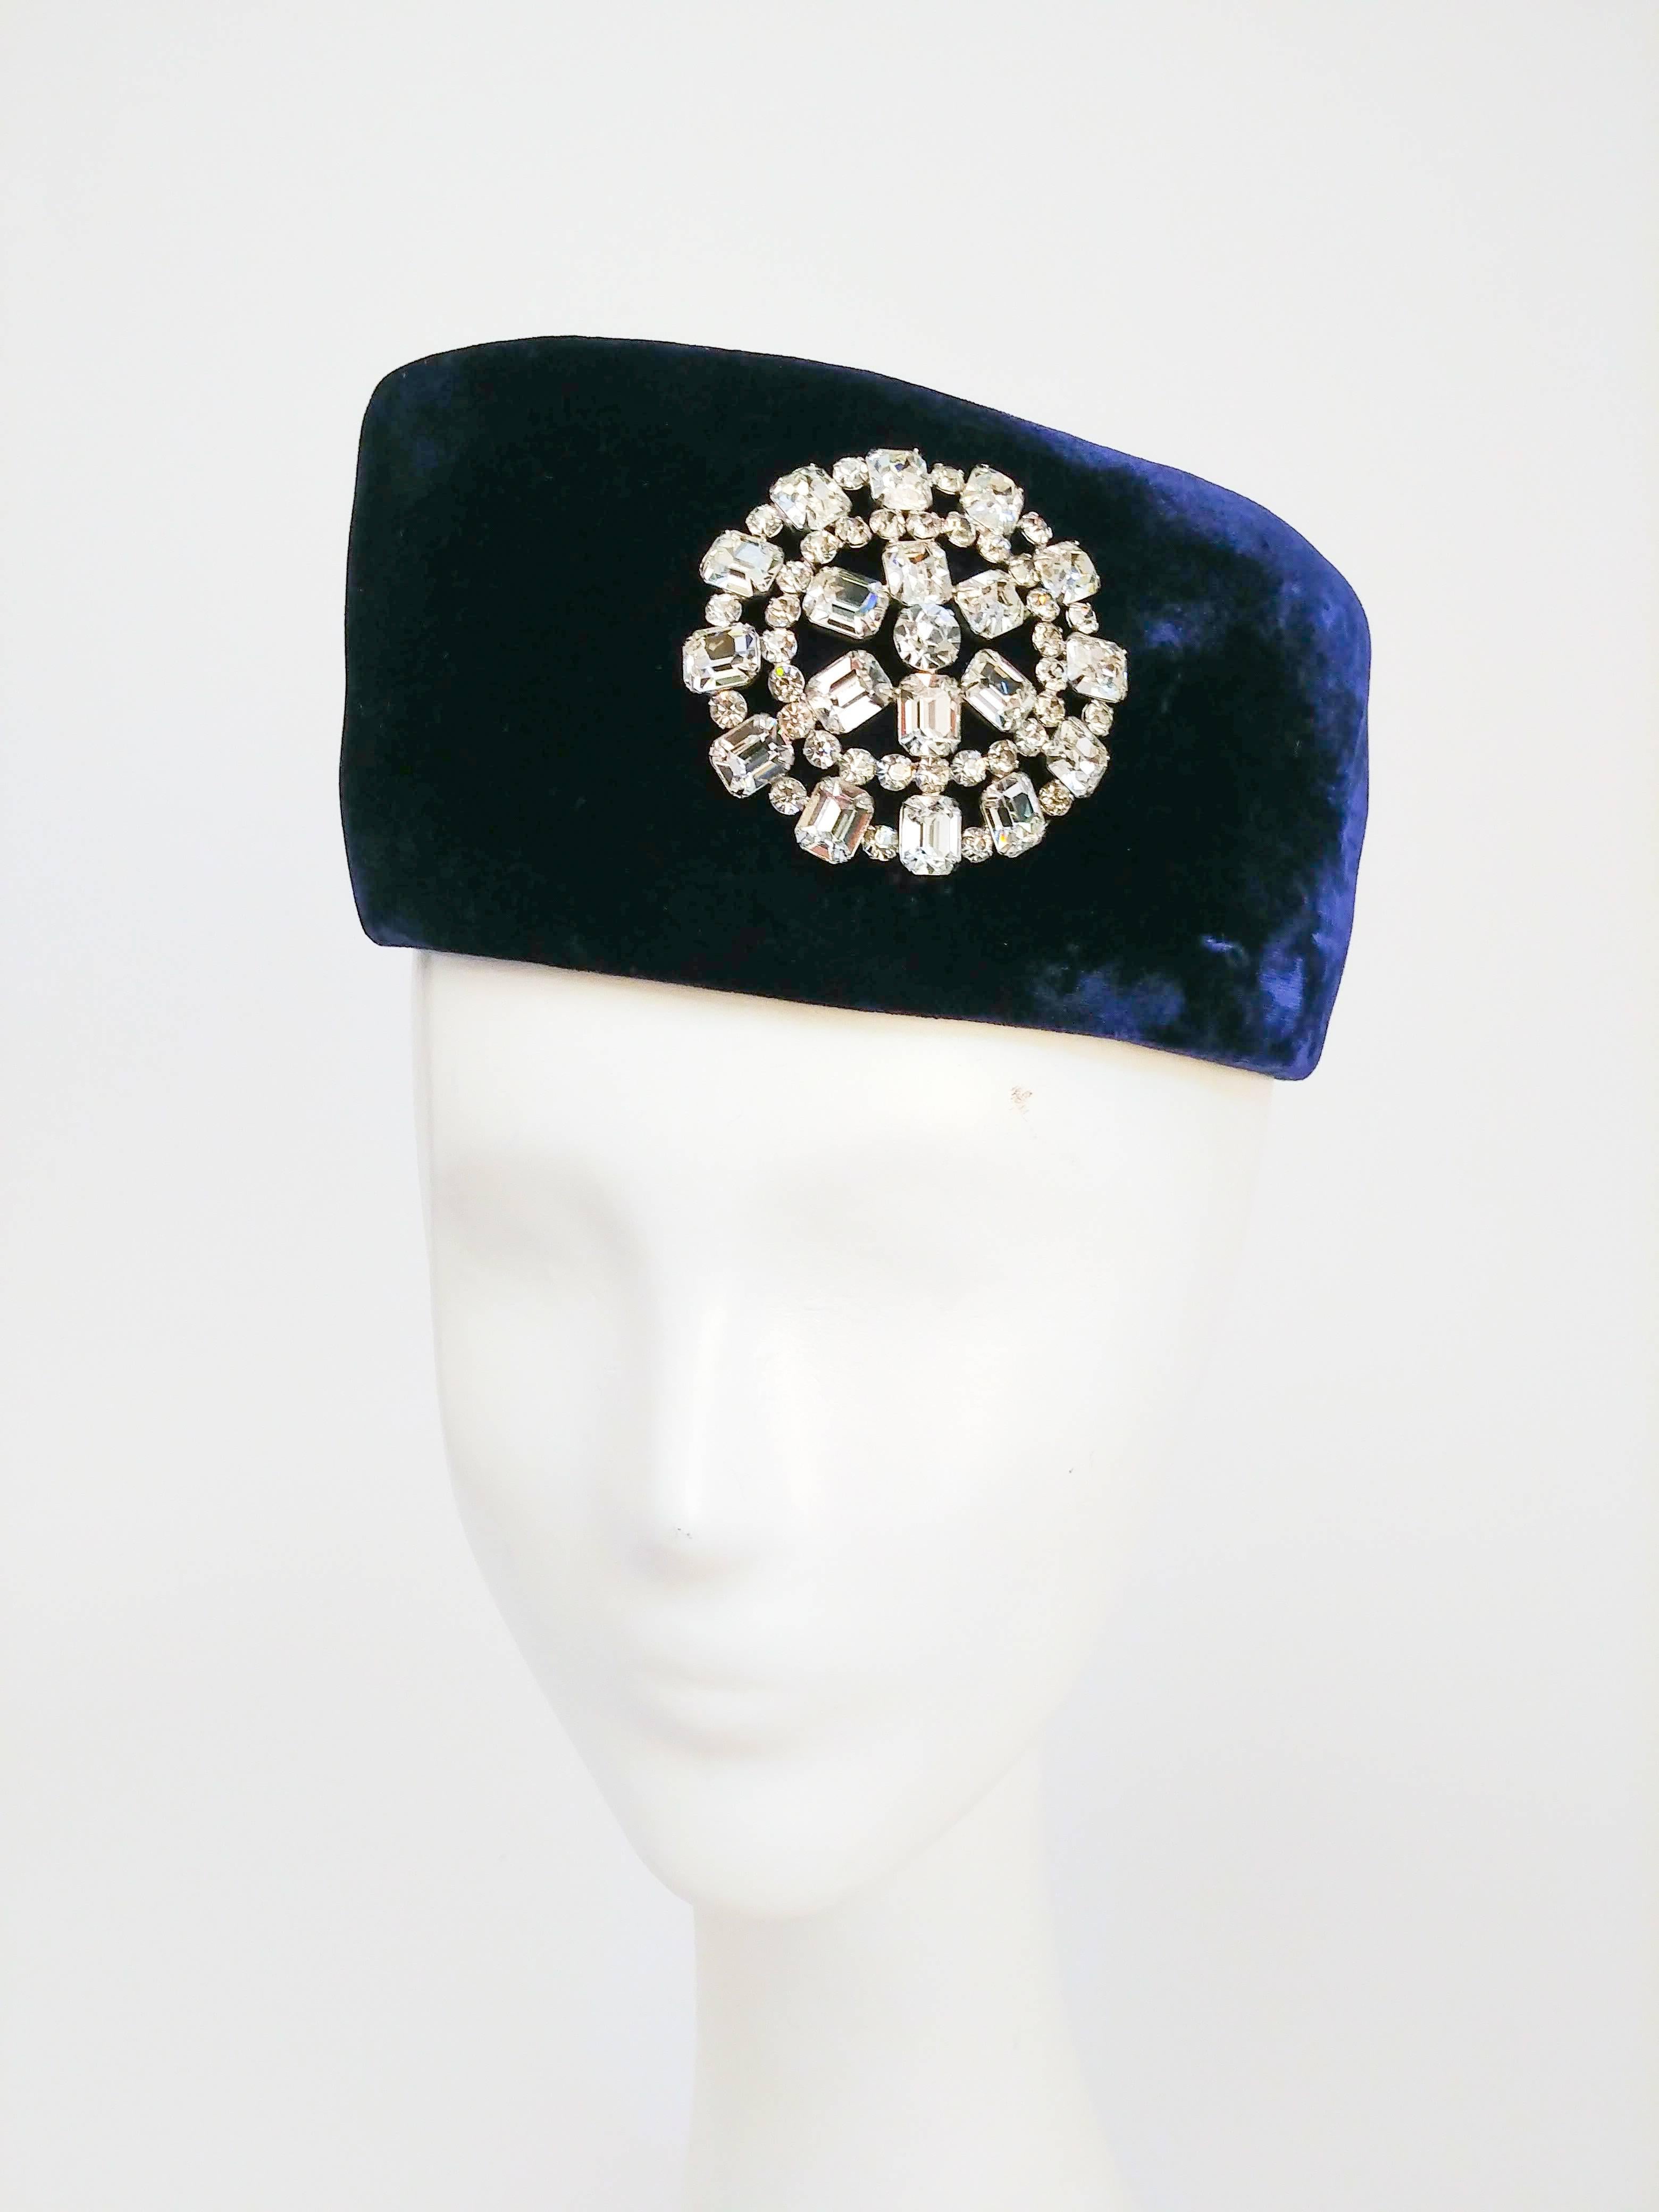 1960s Blue Velvet Hat with Rhinestone Embellishment. Dark blue velvet hat with grosgrain bow, and clear rhinestone and silver-tone embelishment. 21-1/2 inch circumference.